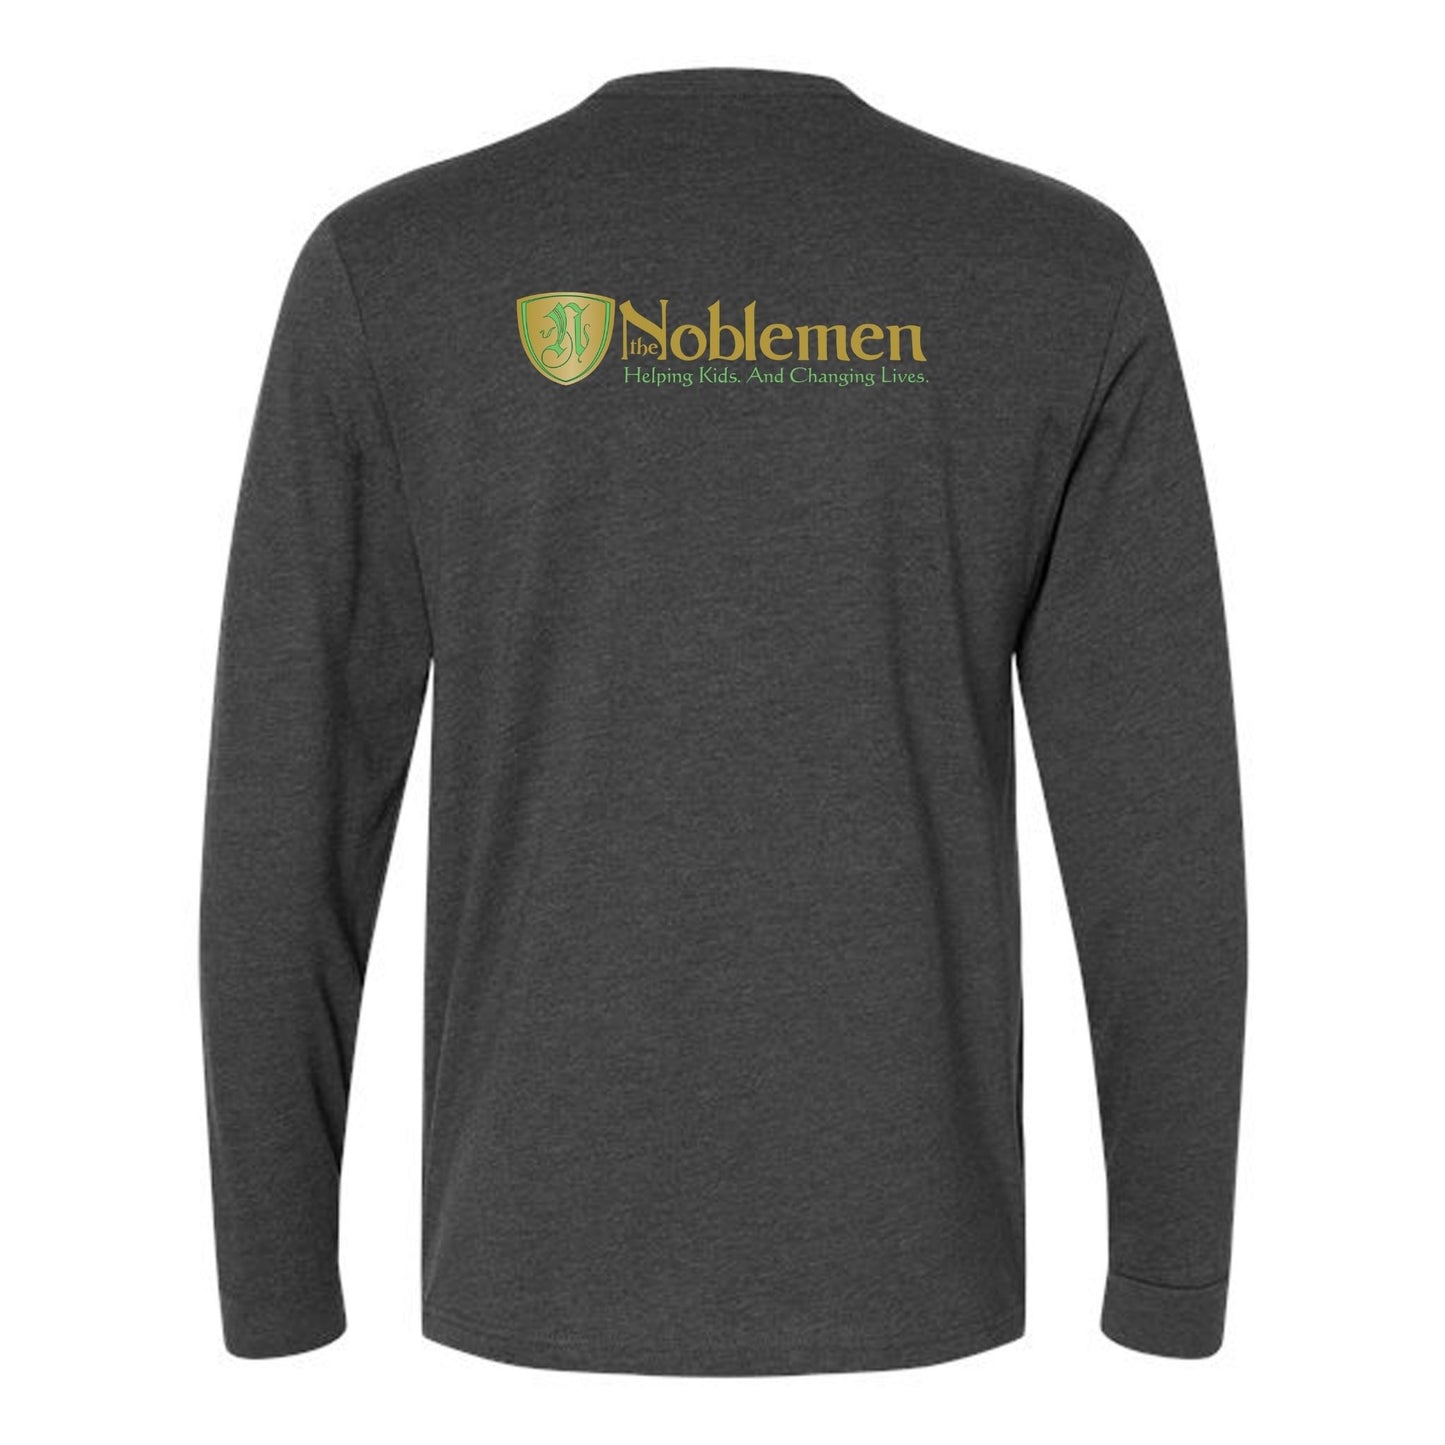 Noblemen - Unisex Long-Sleeve T-Shirt